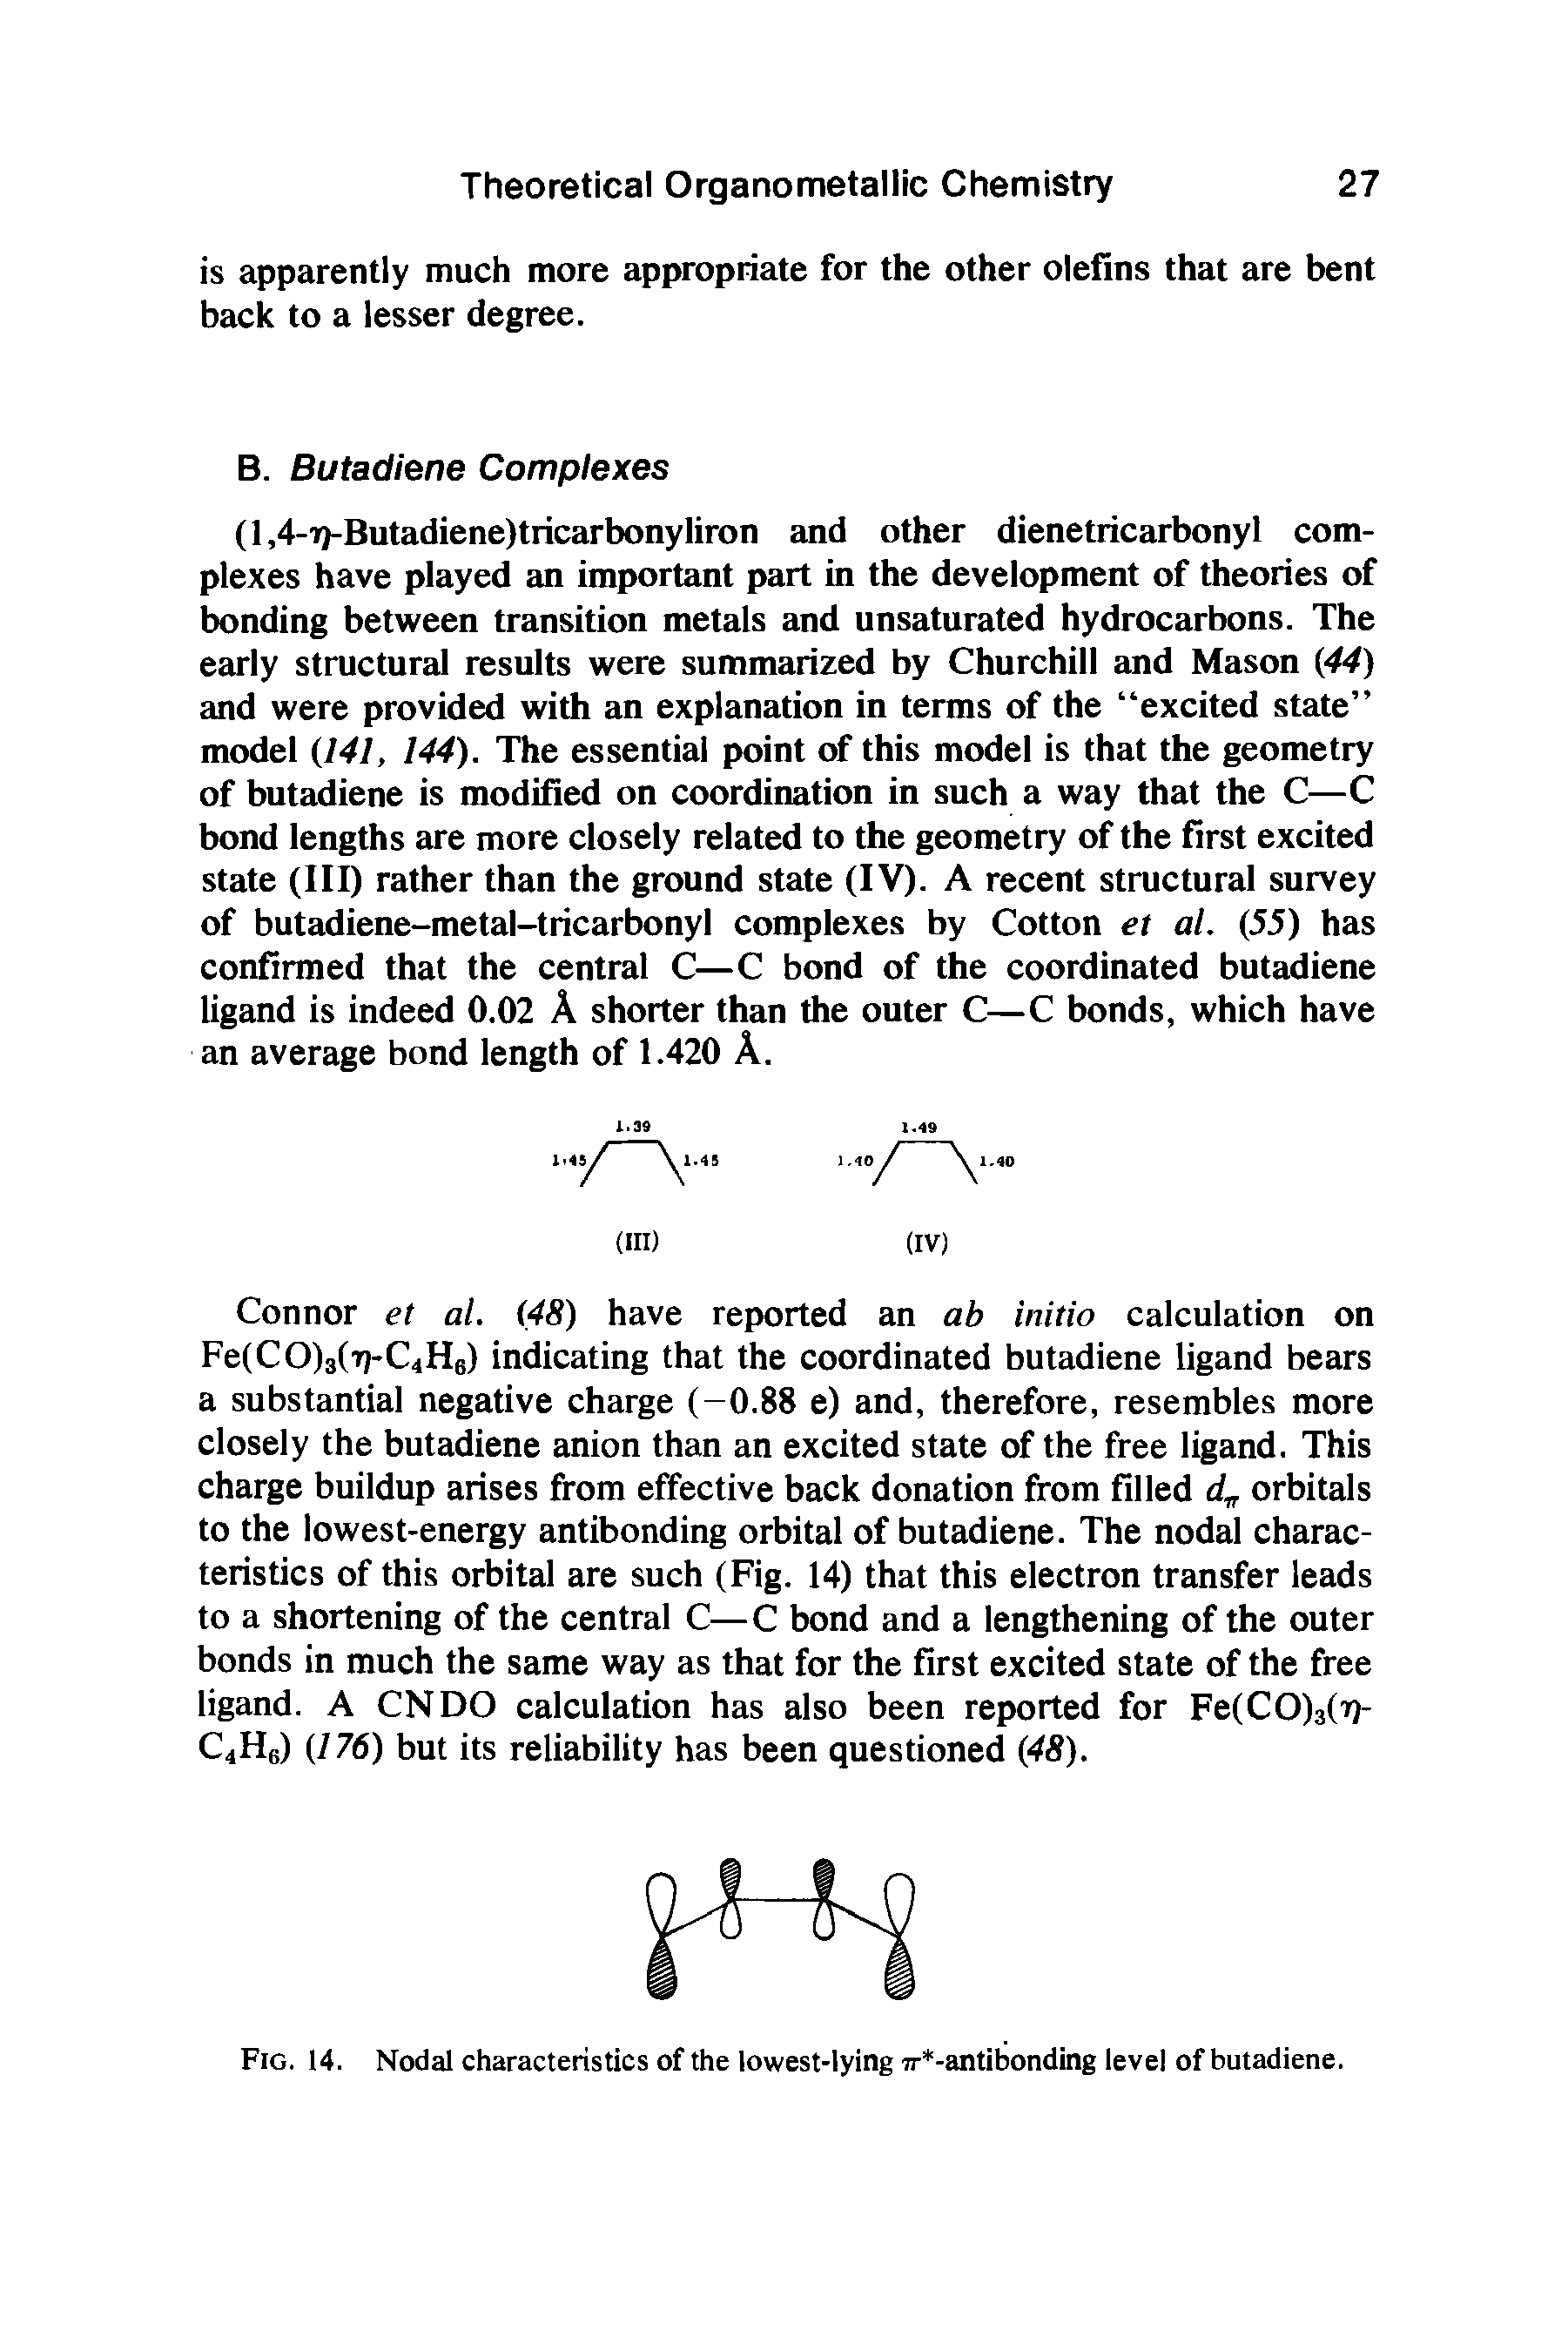 Fig. 14. Nodal characteristics of the lowest-lying ir -antibonding level of butadiene.